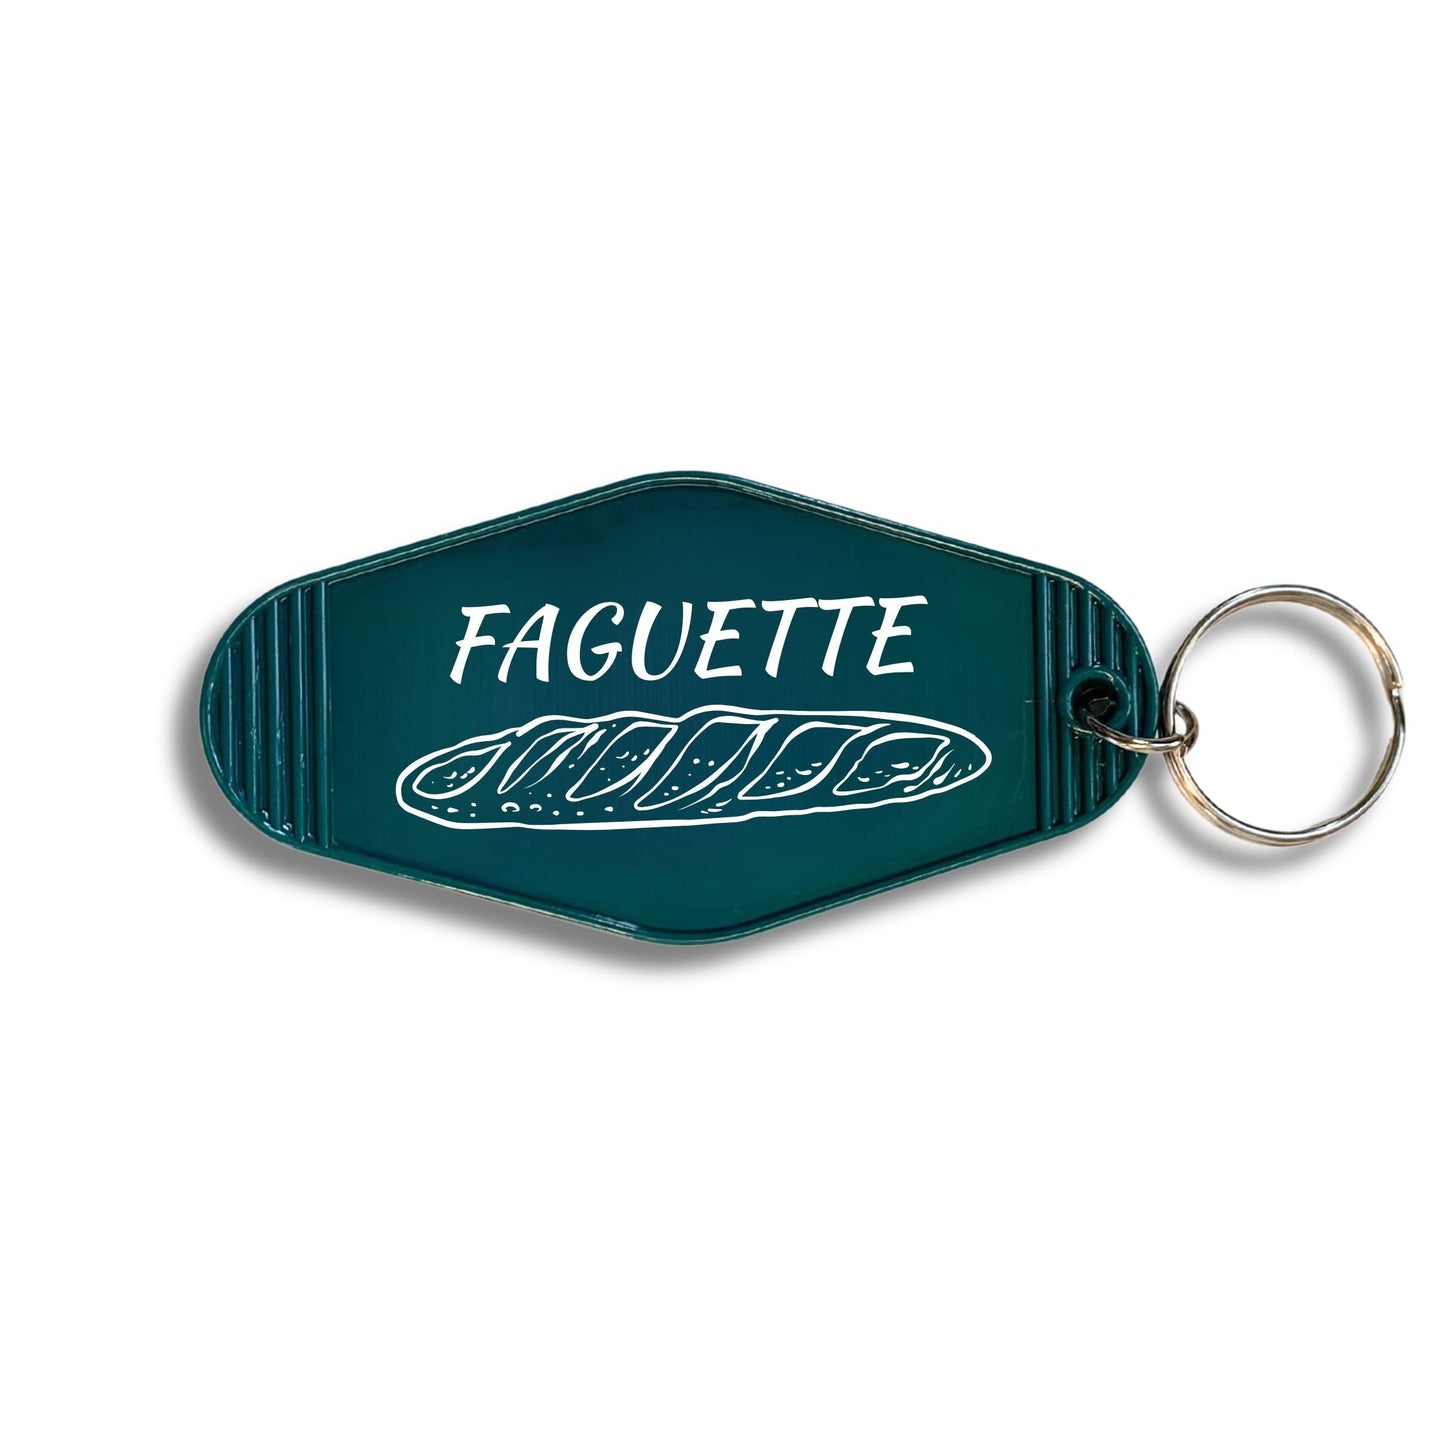 Faguette Gay Pride Motel Keychain with Baguette Bread Motif